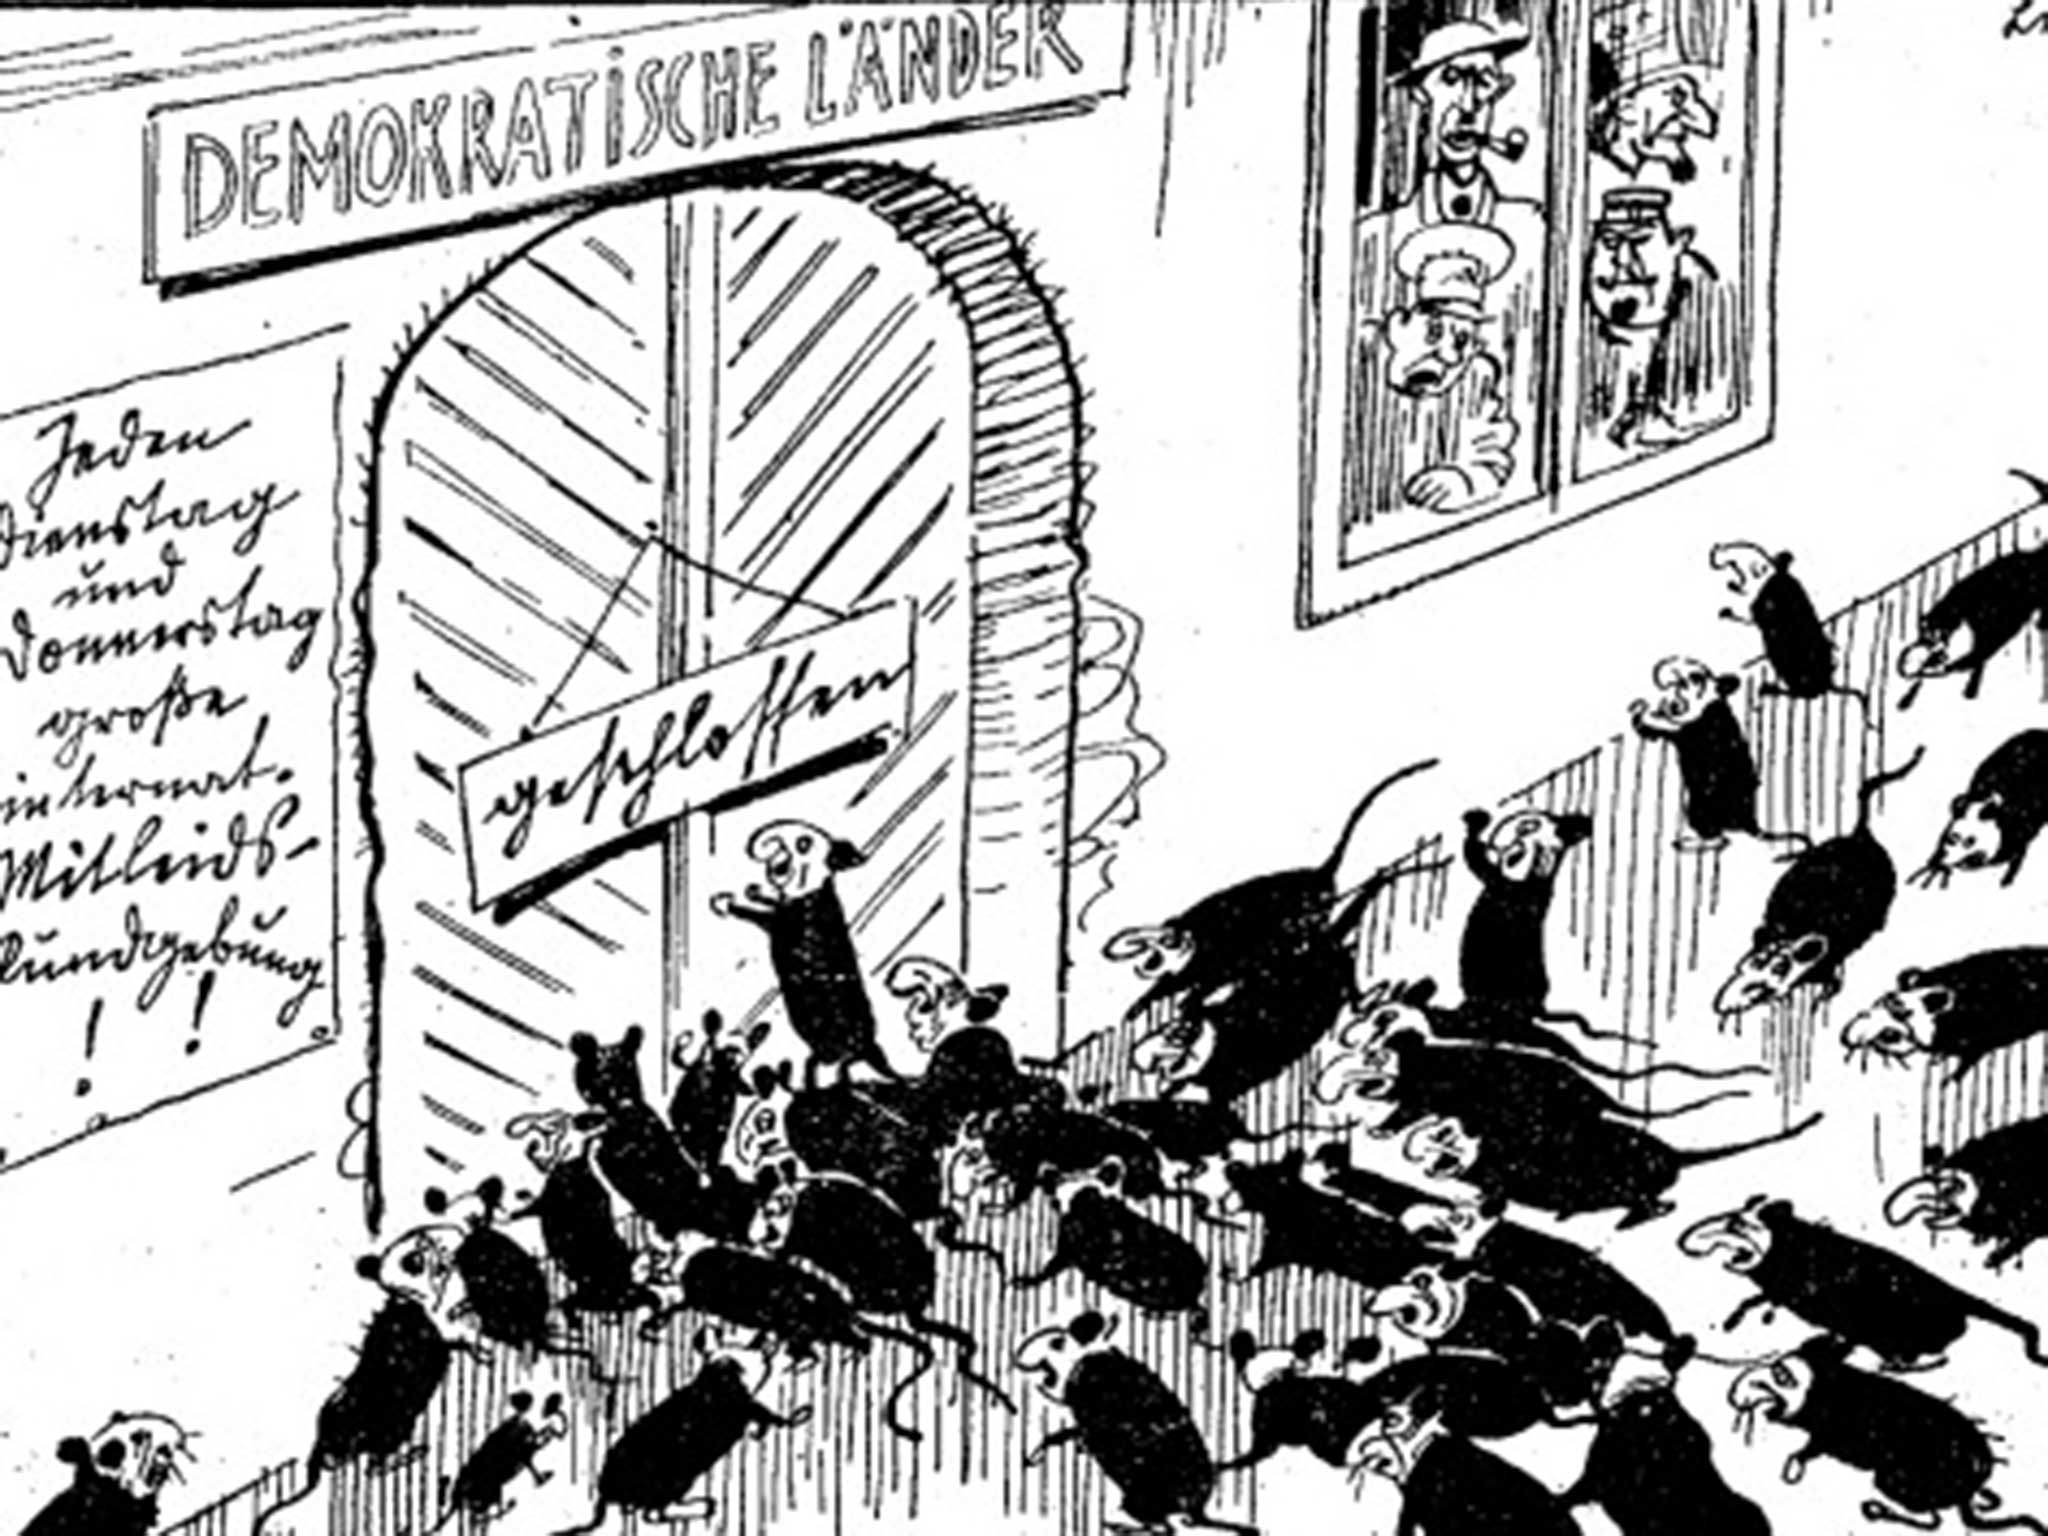 The bottom half of a cartoon published by Das Kleine Blatt in 1939